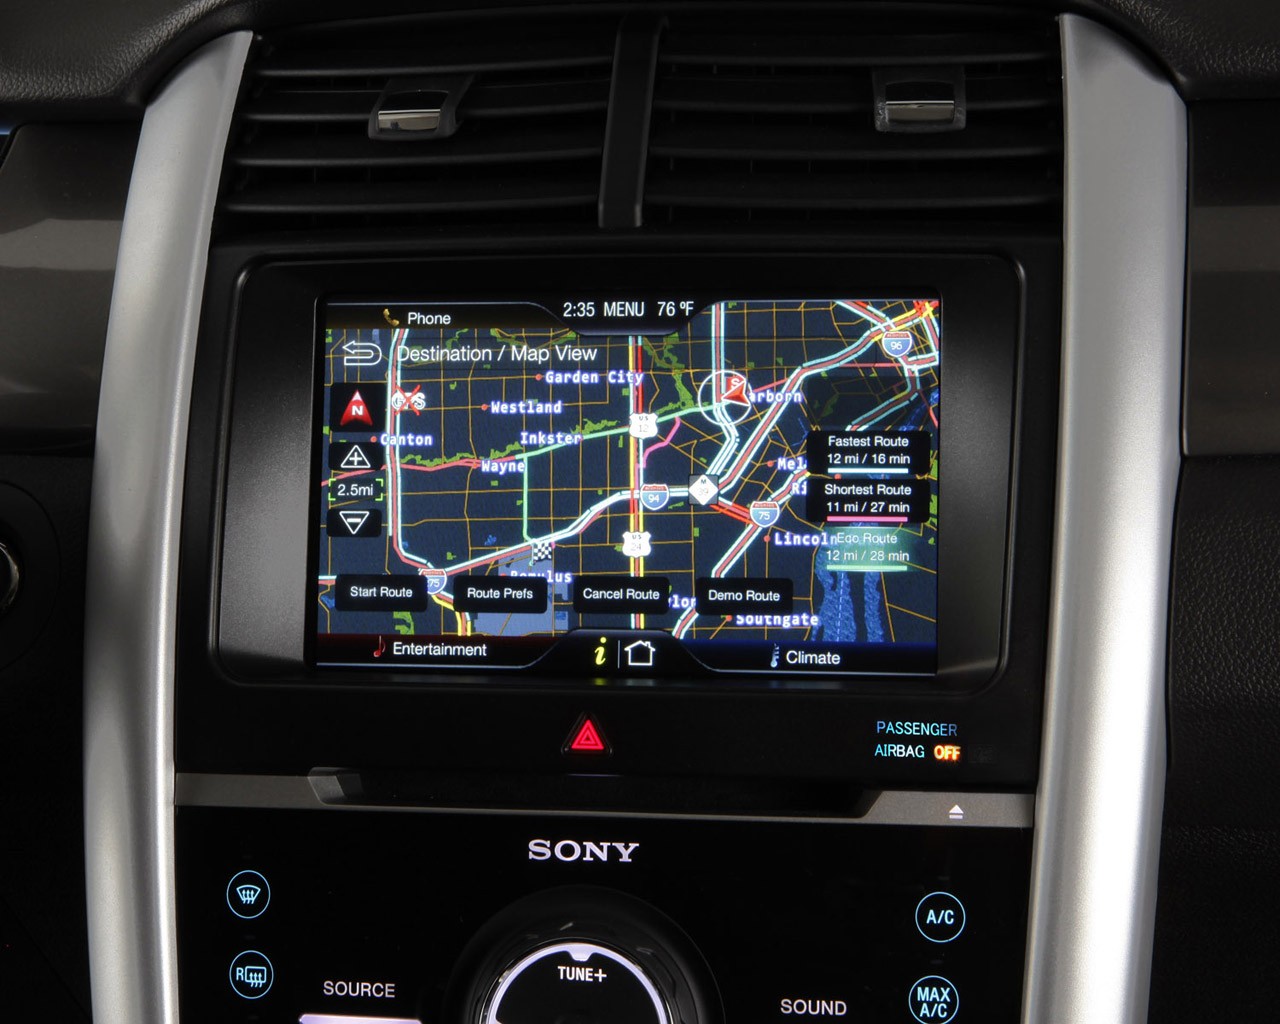 2007 Ford edge navigation system manual #4